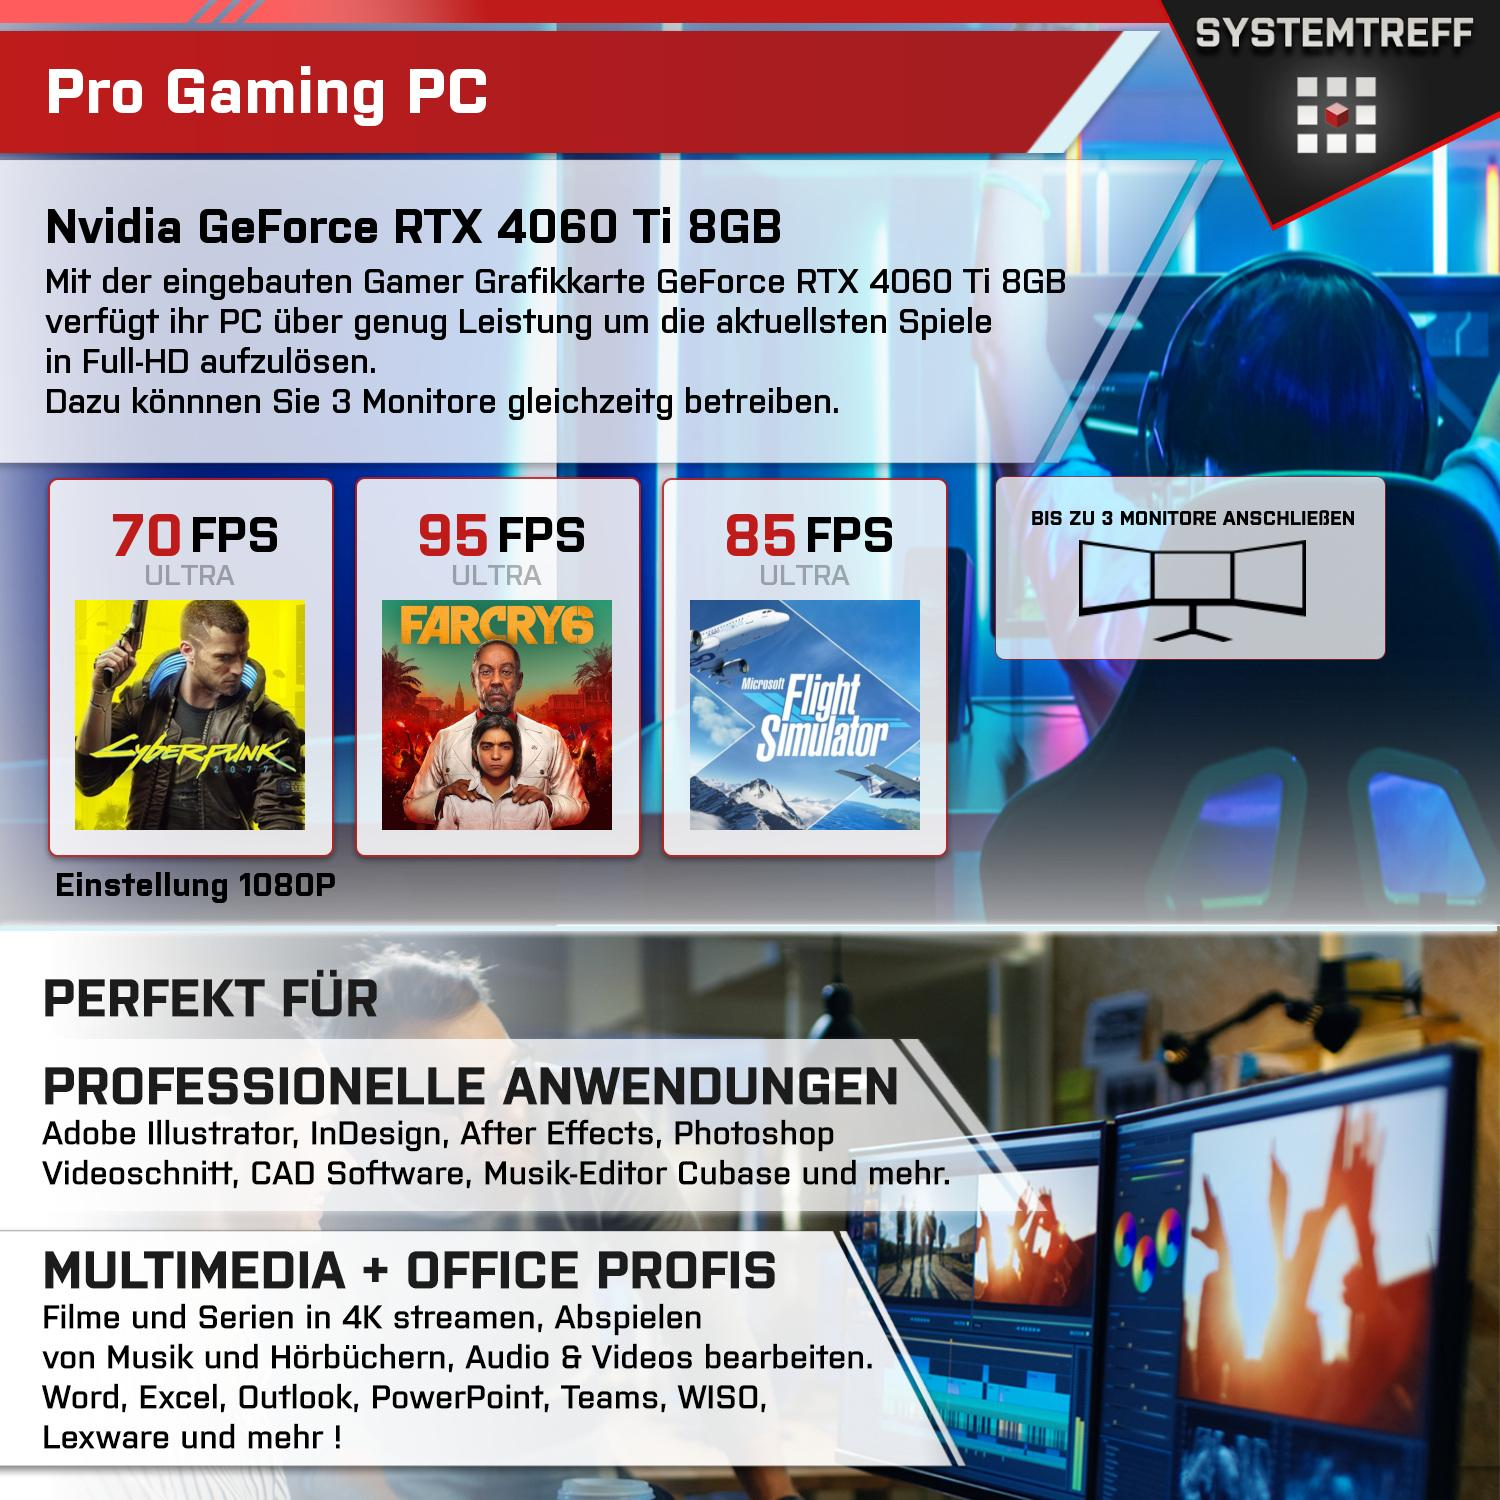 Pro mit 5 Prozessor, Ti AMD Windows GeForce GB 4060 Ryzen™ Gaming GB 11 5 1000 RTX™ NVIDIA SYSTEMTREFF 5600X, mSSD, Ryzen RAM, AMD Pro, 16 Gaming PC